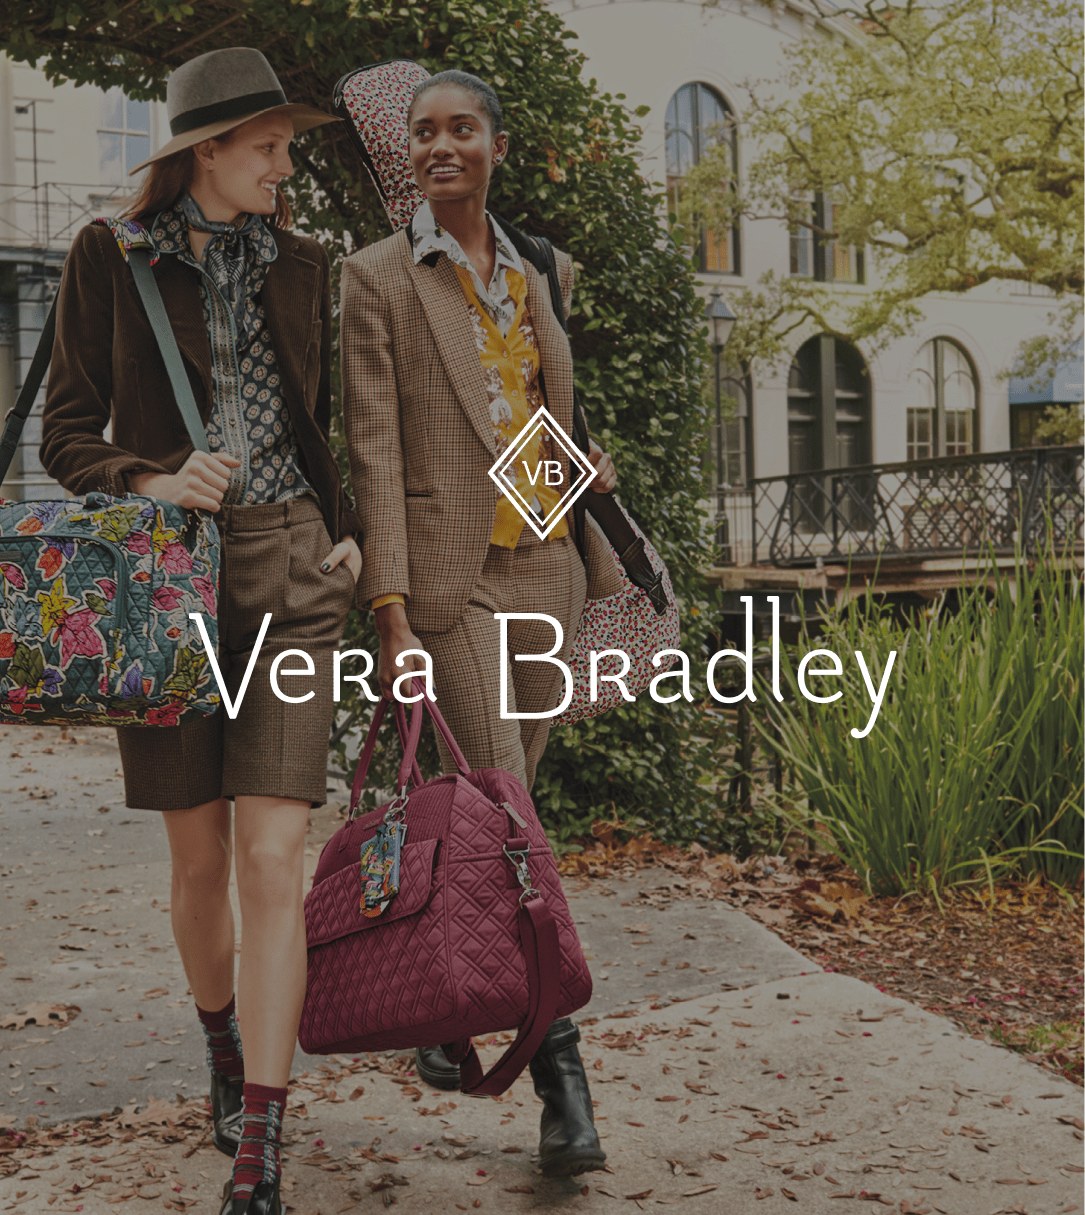 Vera Bradley Campaign Image